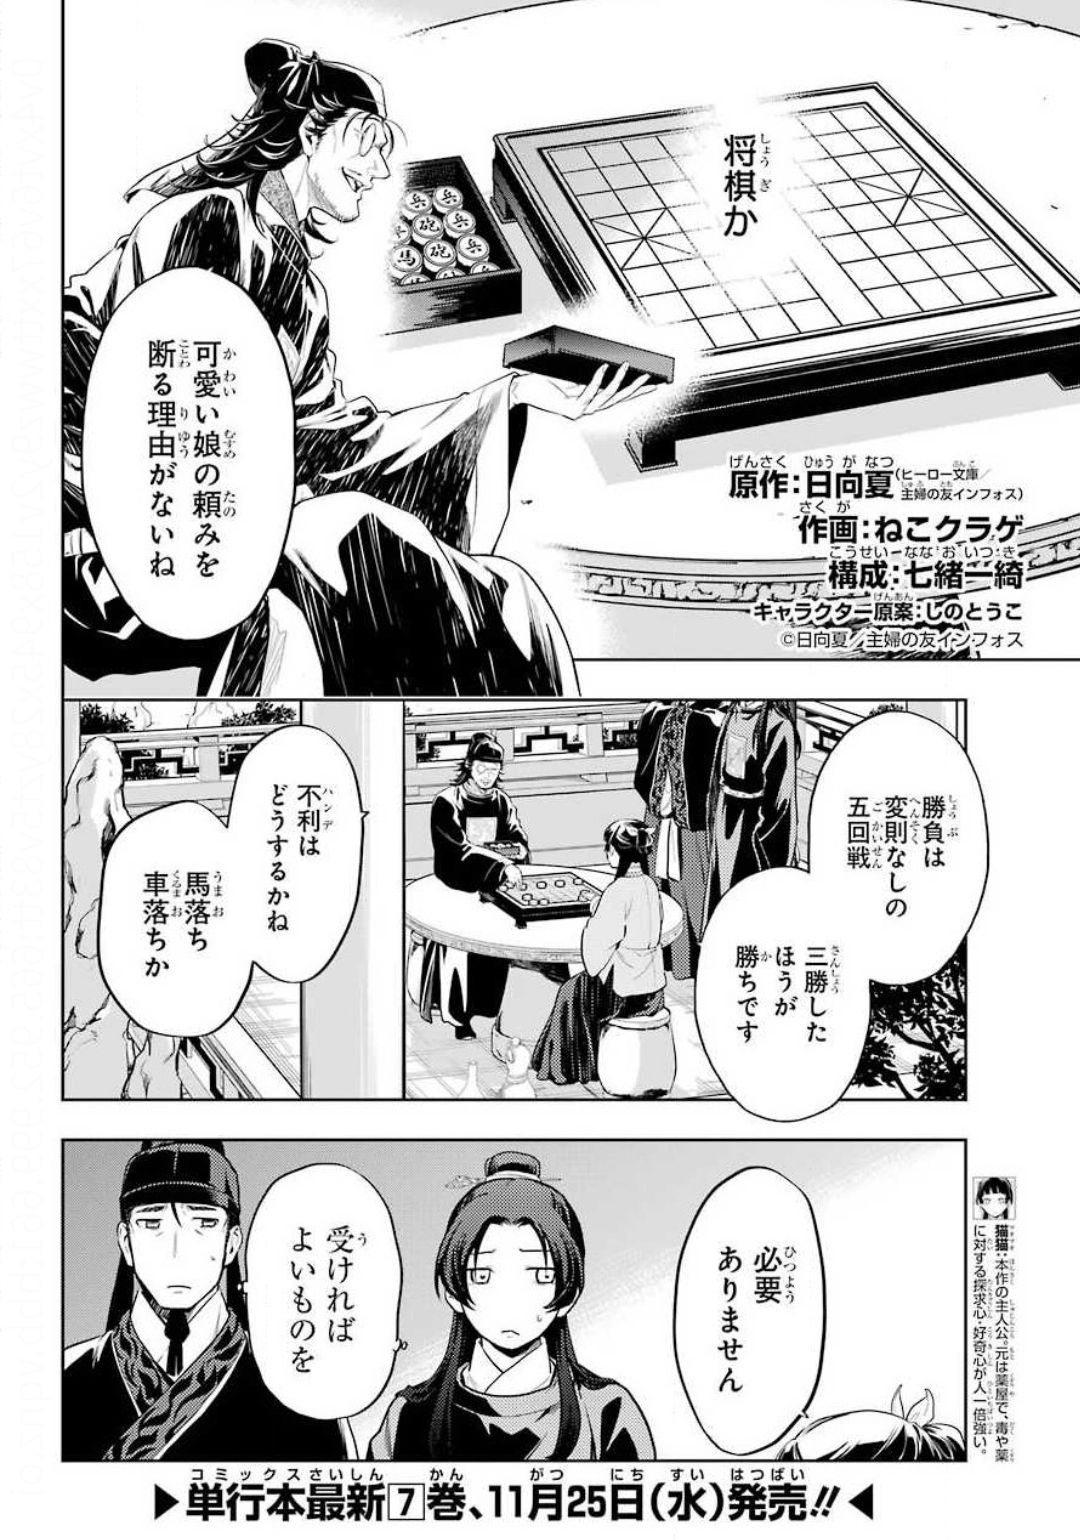 Kusuriya no Hitorigoto - Chapter 36.3 - Page 2